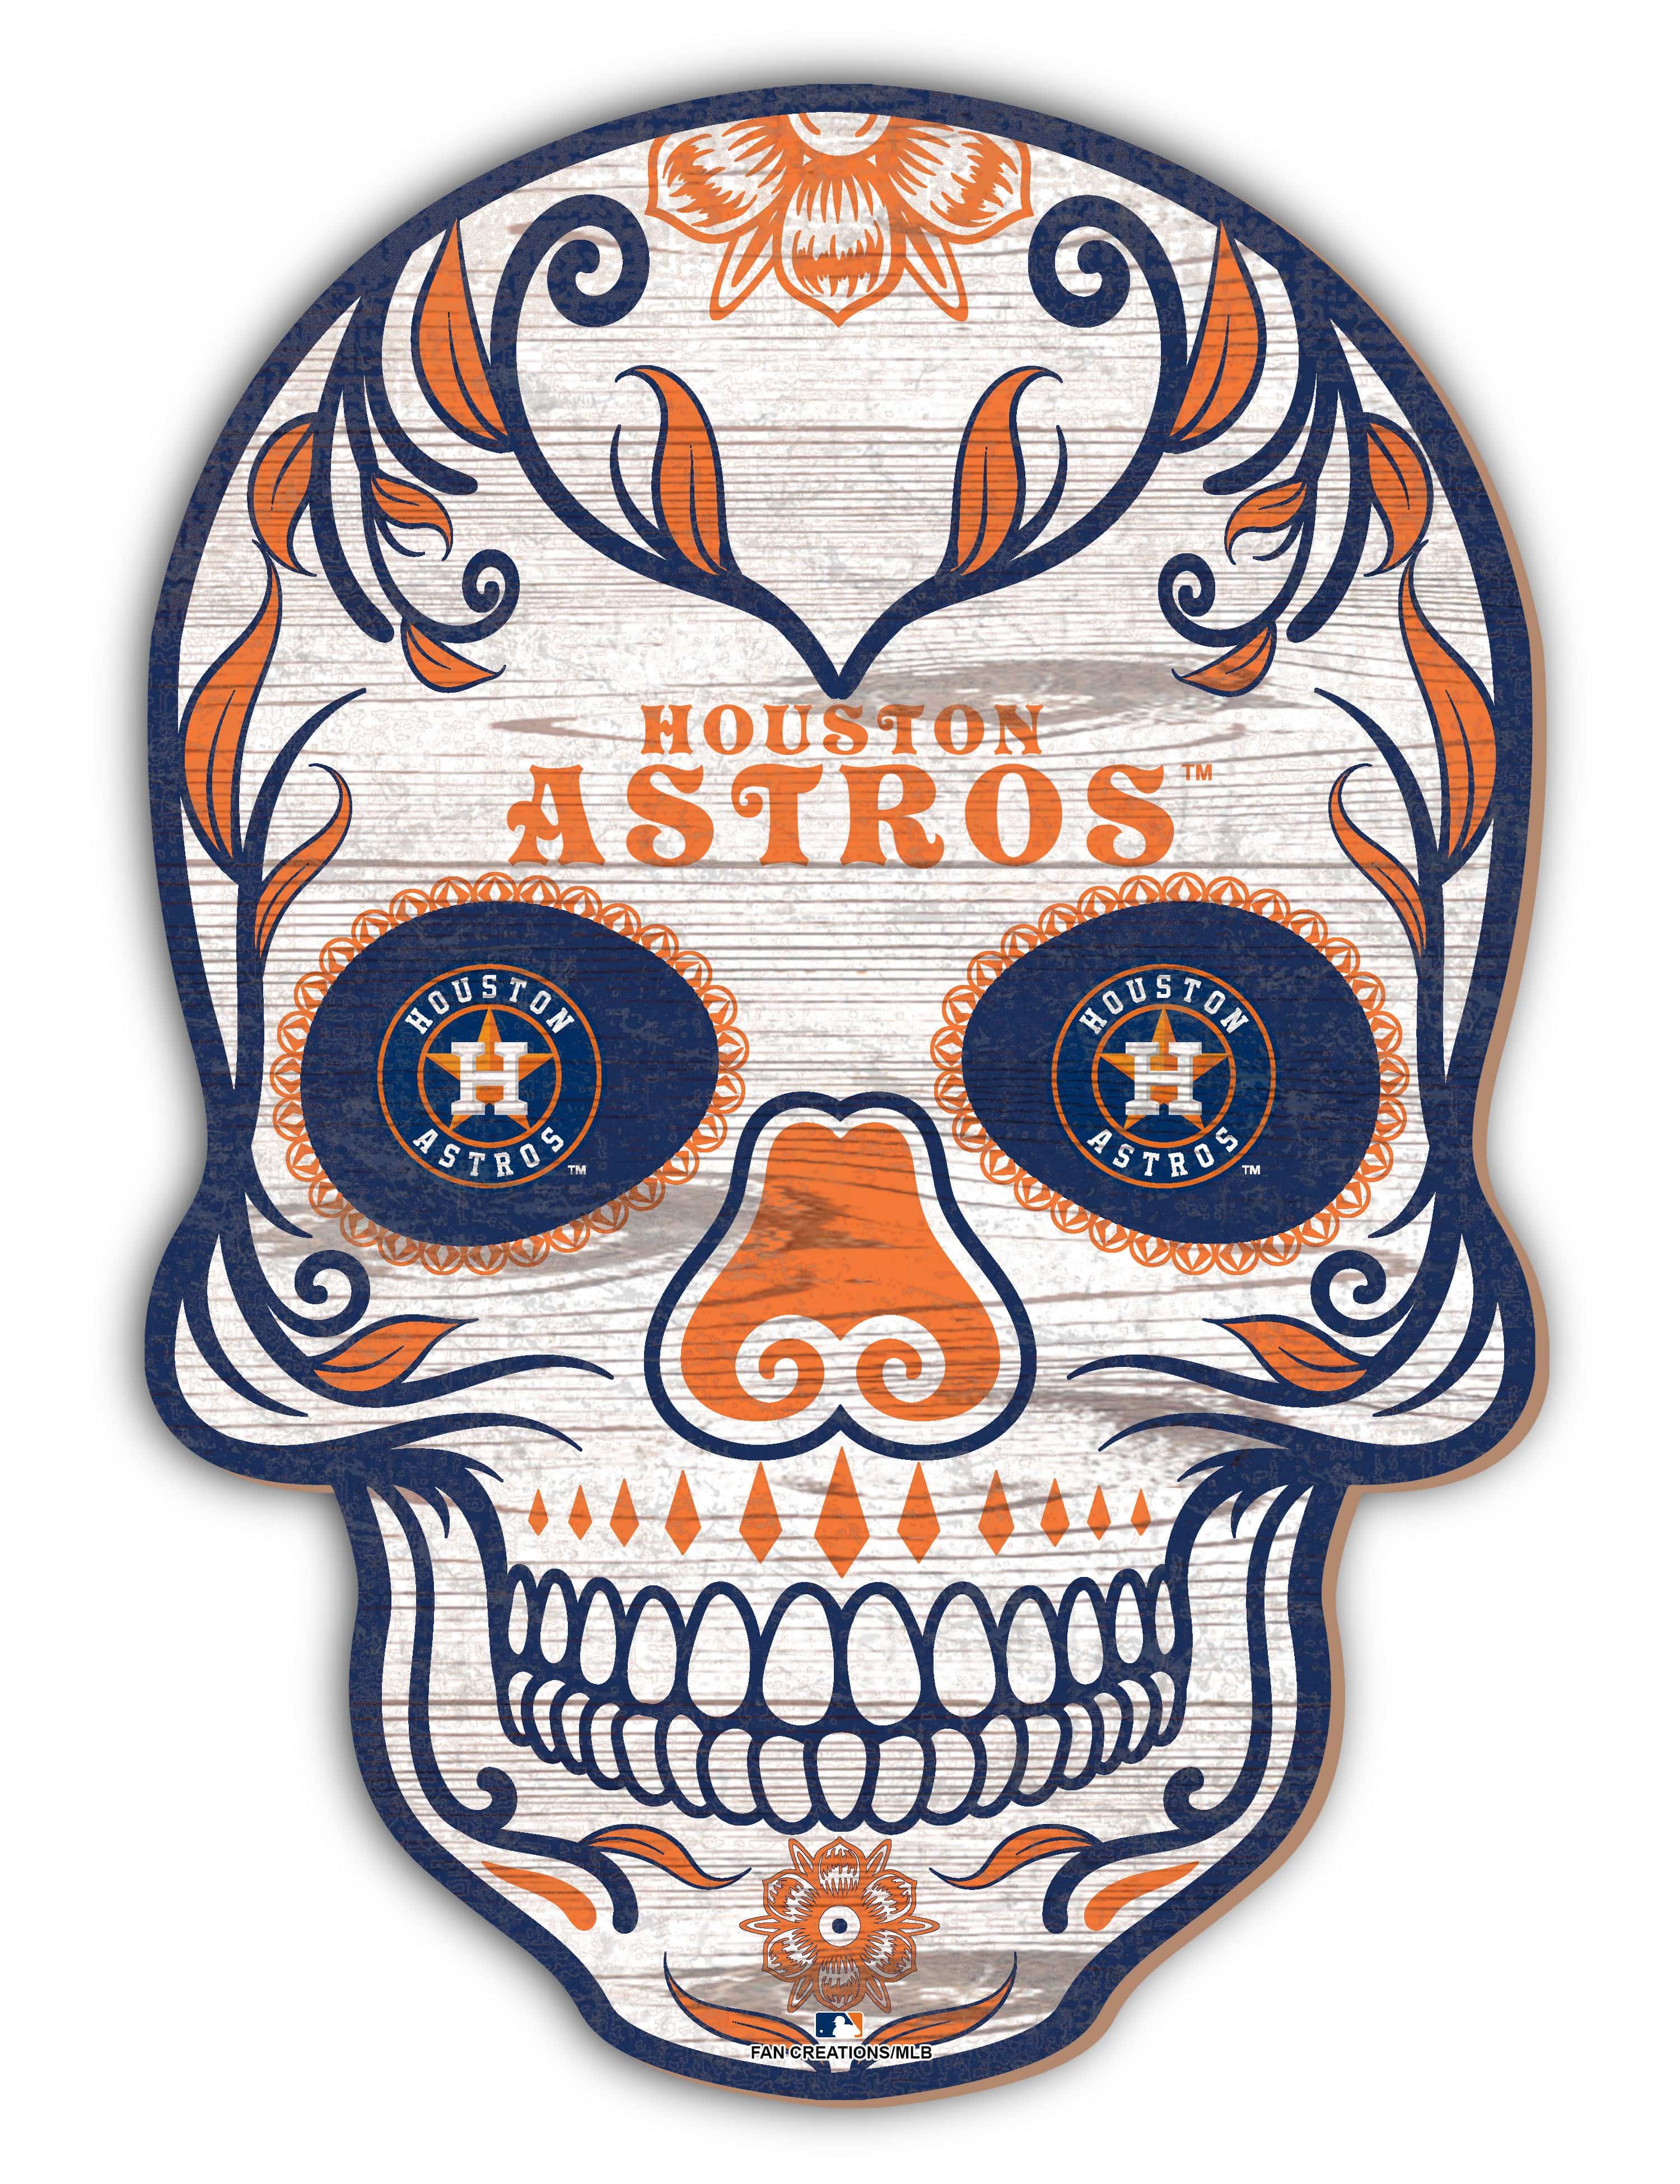 Houston Astros Regular Season MLB Prints for sale